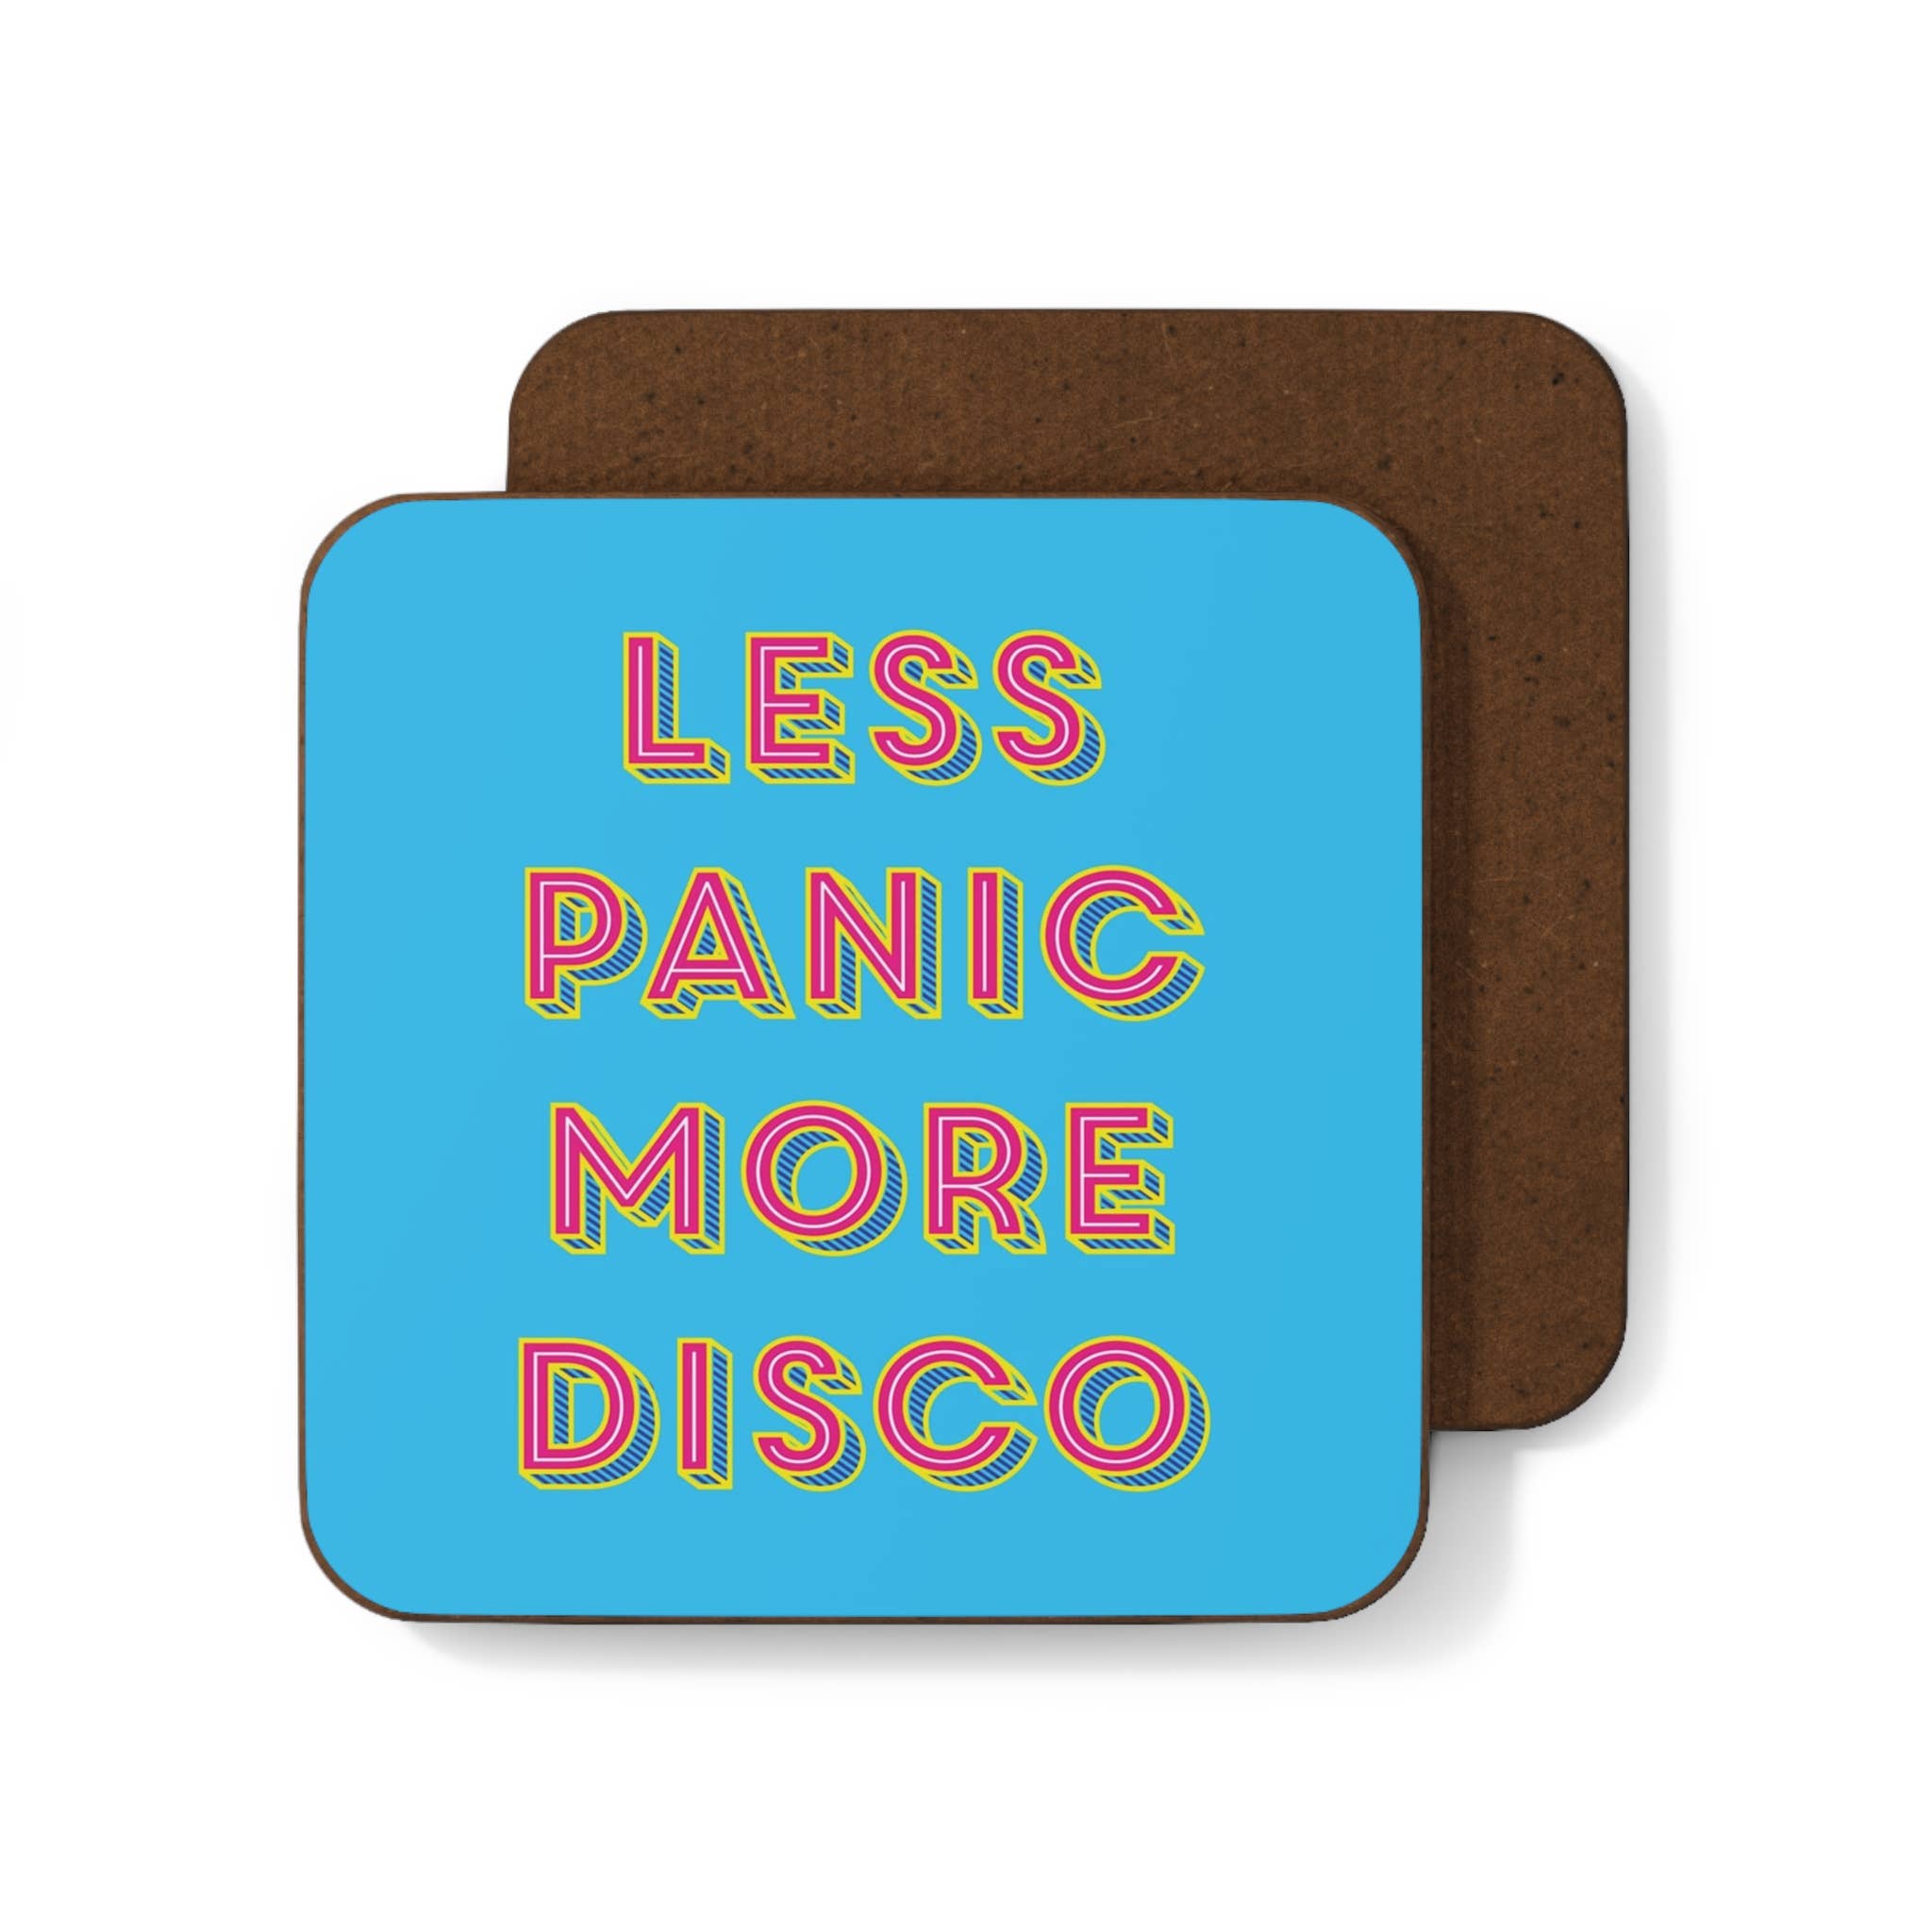 Less Panic More Disco Coaster